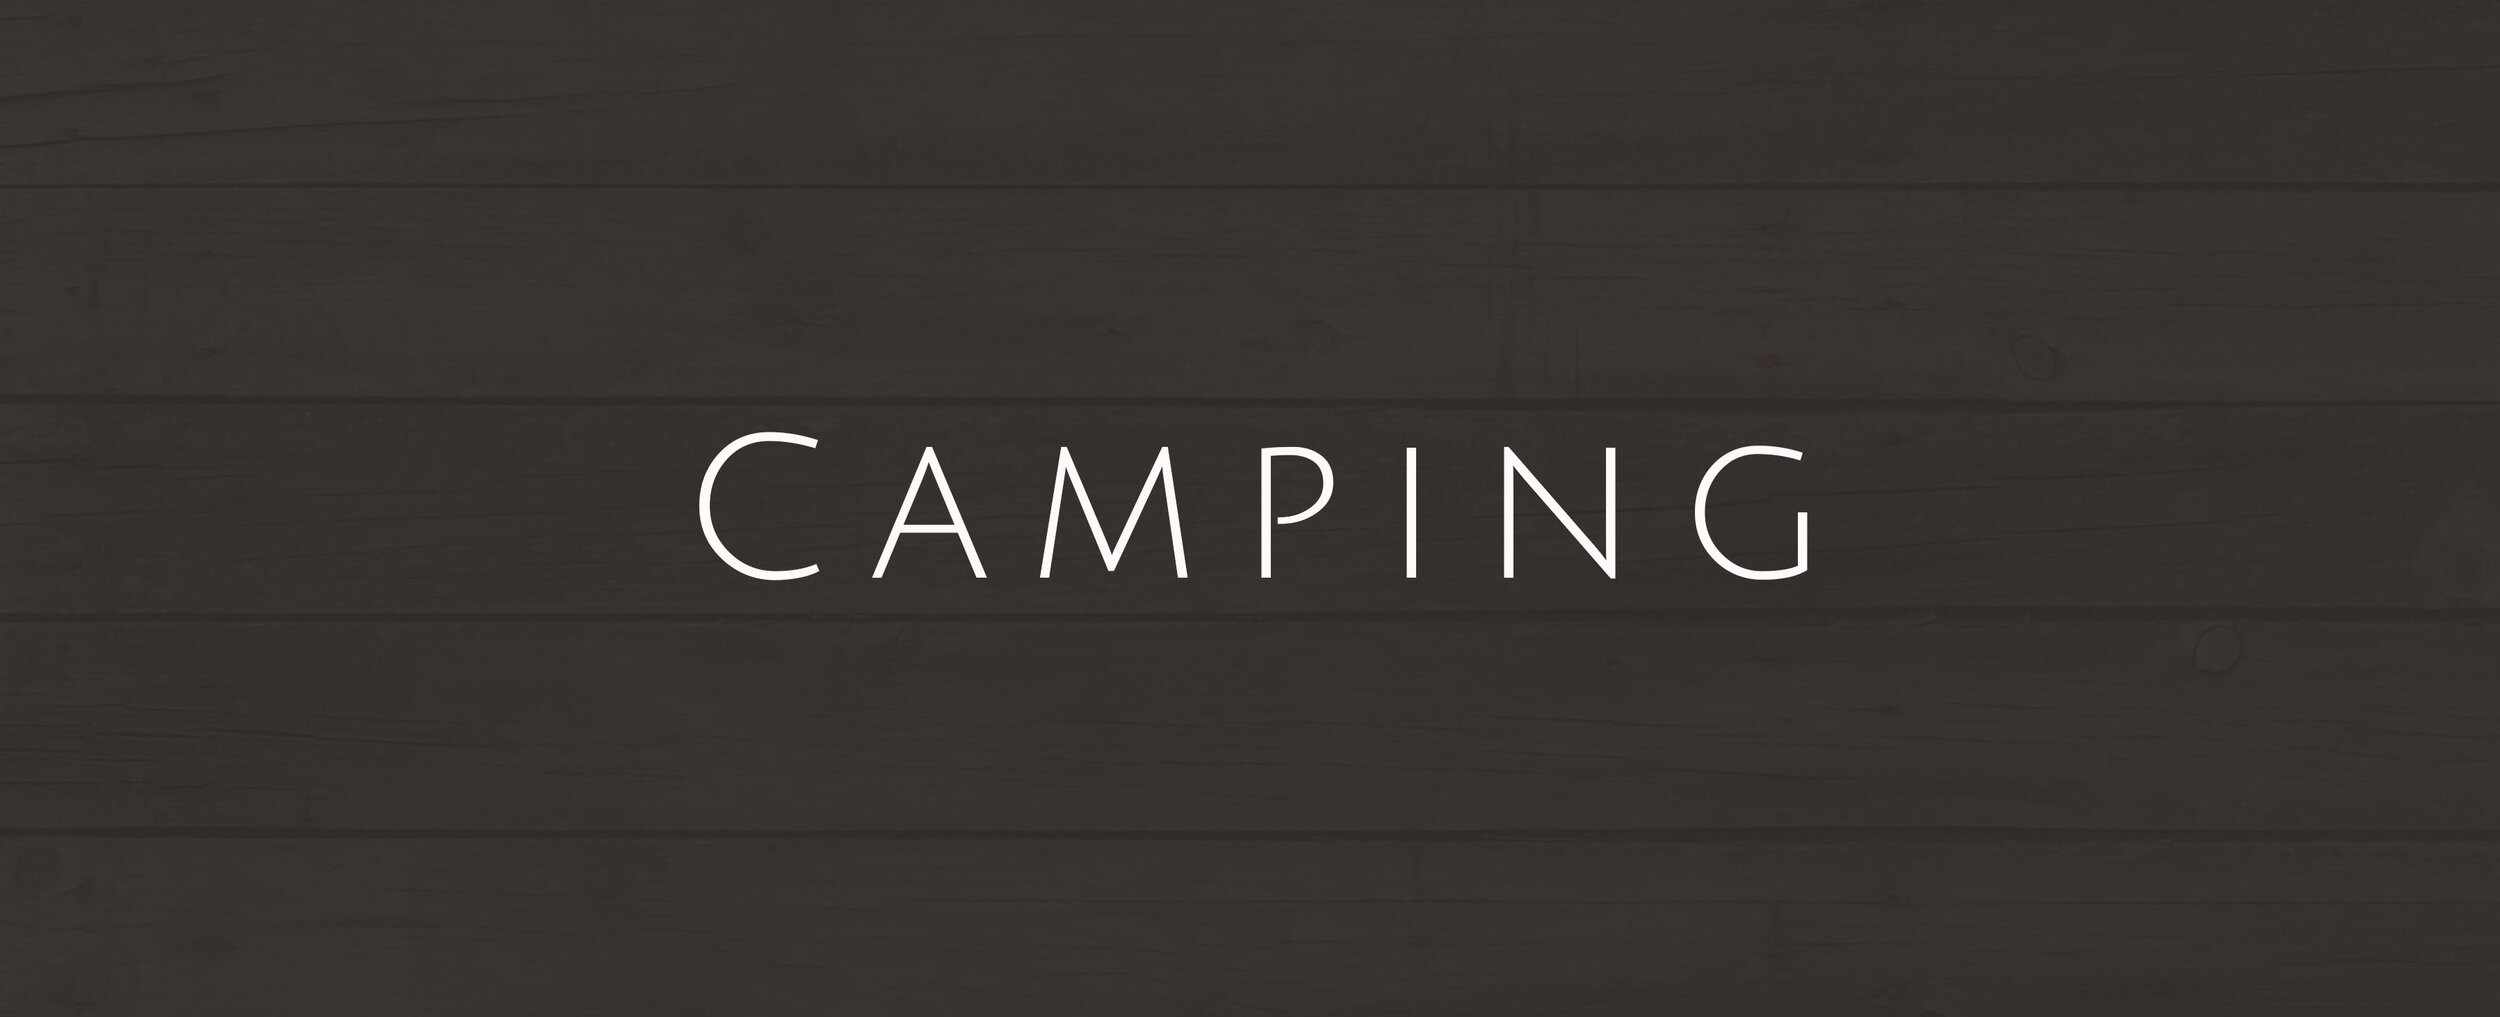 All - Camping.jpg